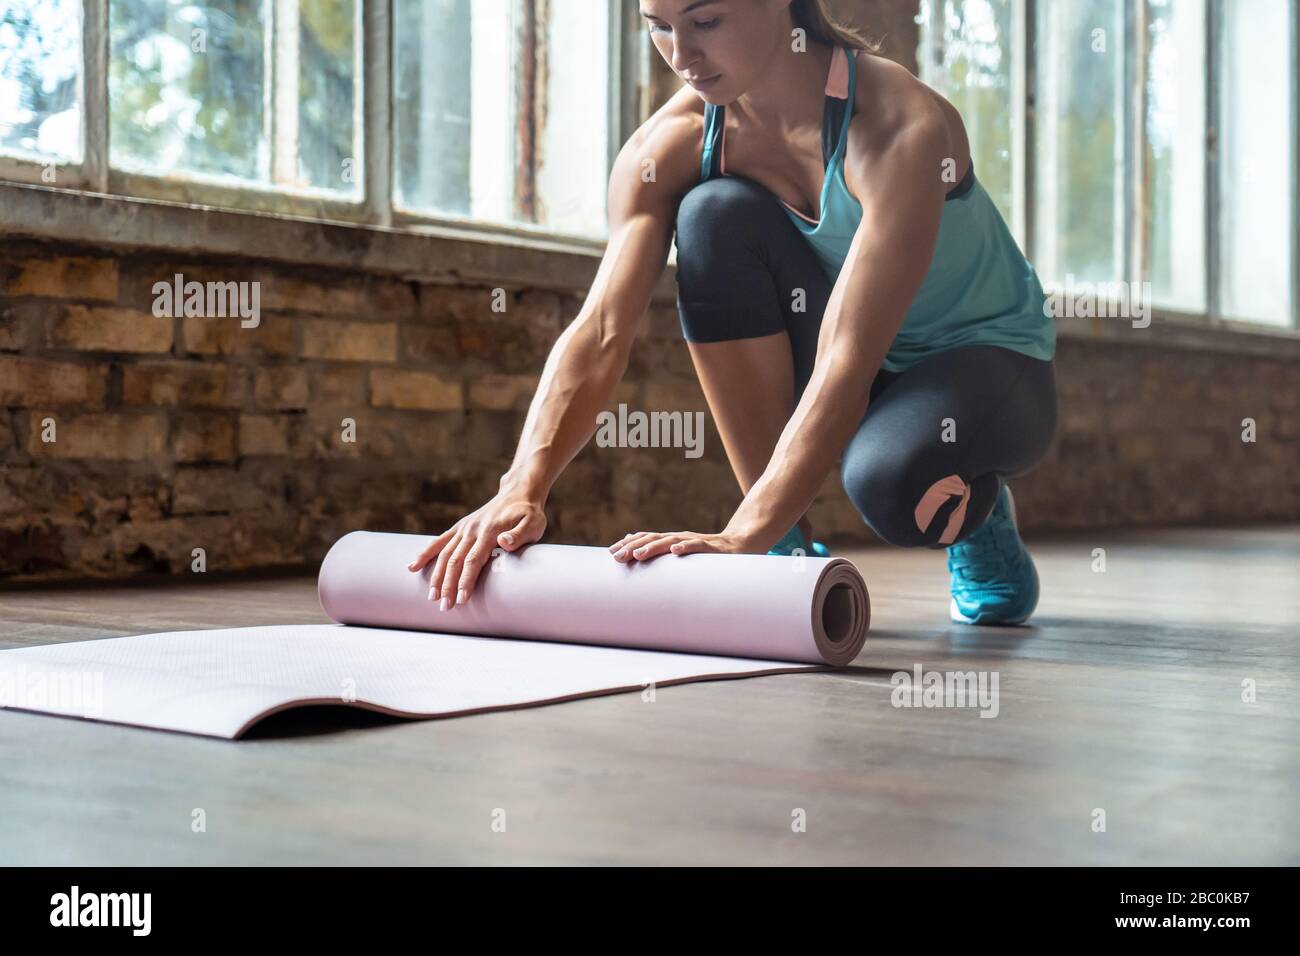 Sporty fit woman yoga instructor wear sportswear roll unroll yoga mat in gym. Stock Photo